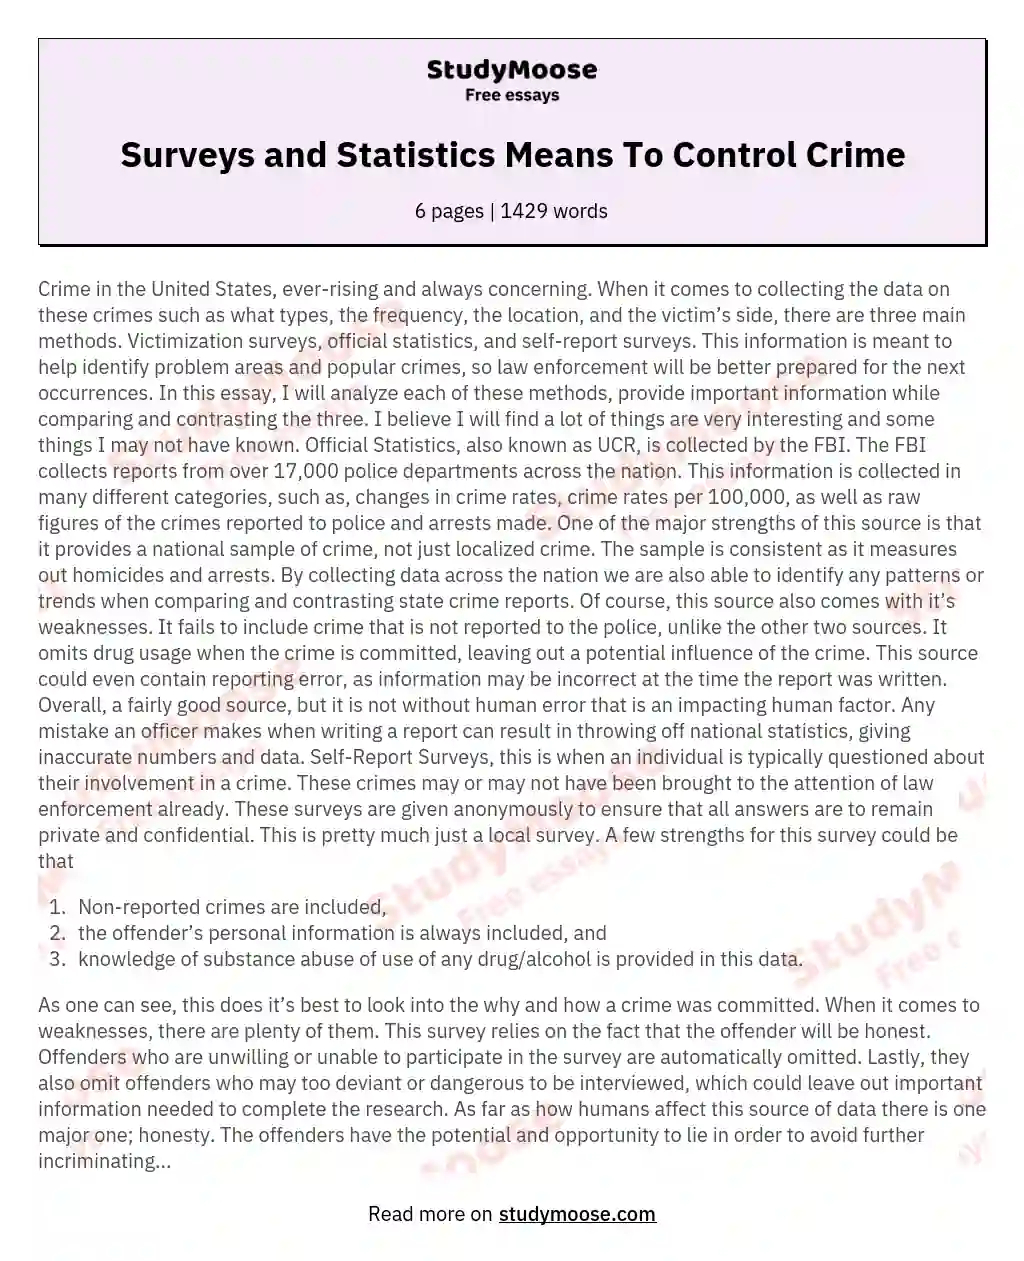 Surveys and Statistics Means To Control Crime essay